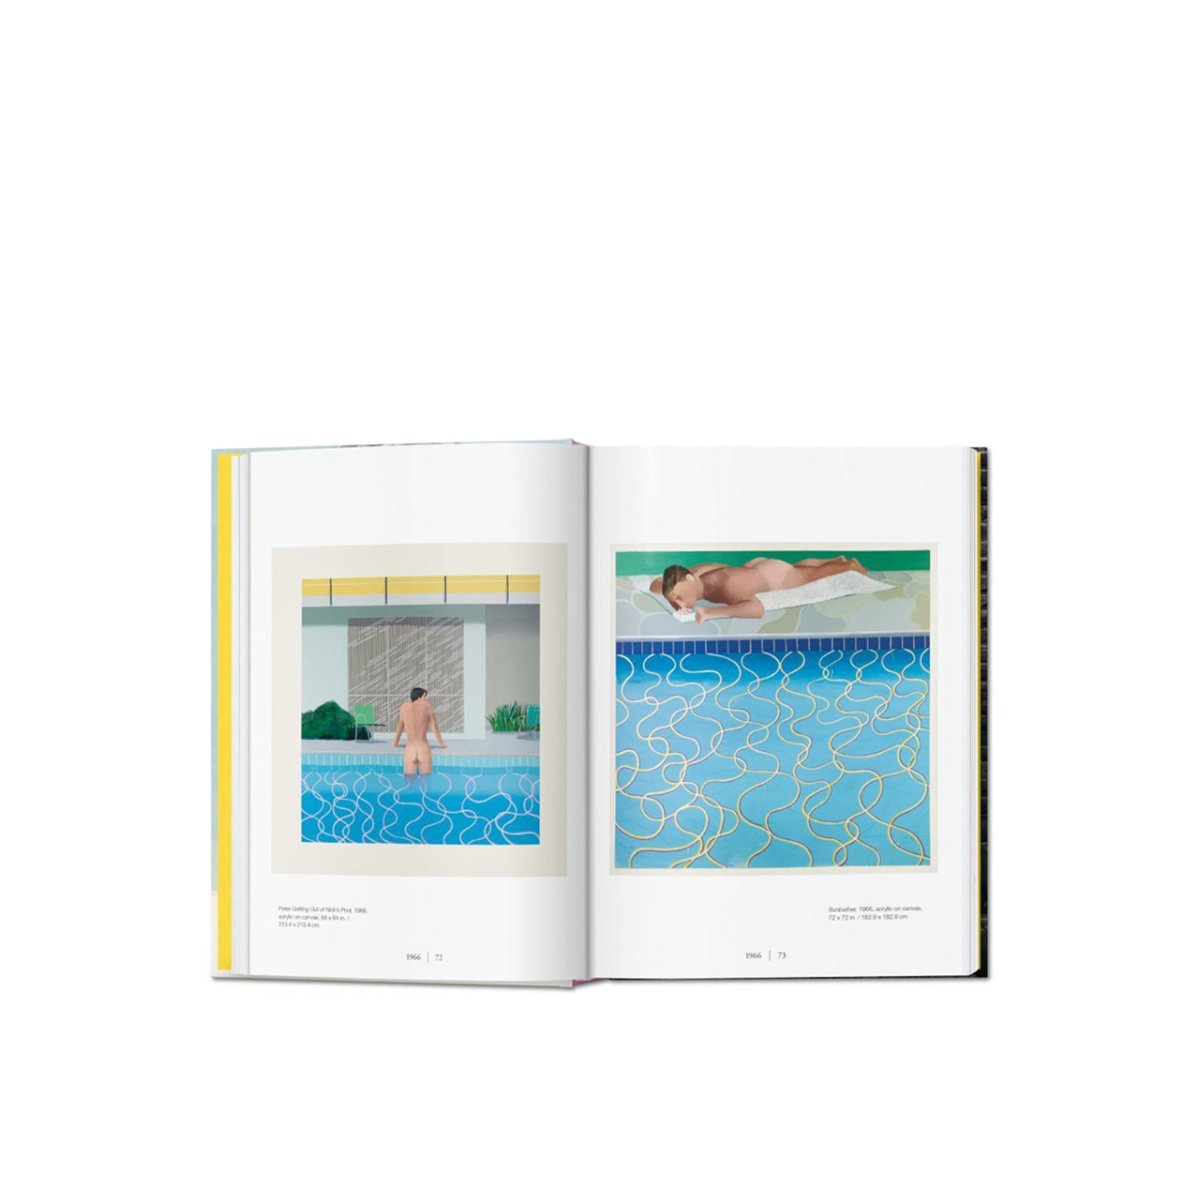 Taschen David Hockney a Chronologie 40th Ed.  - Allike Store